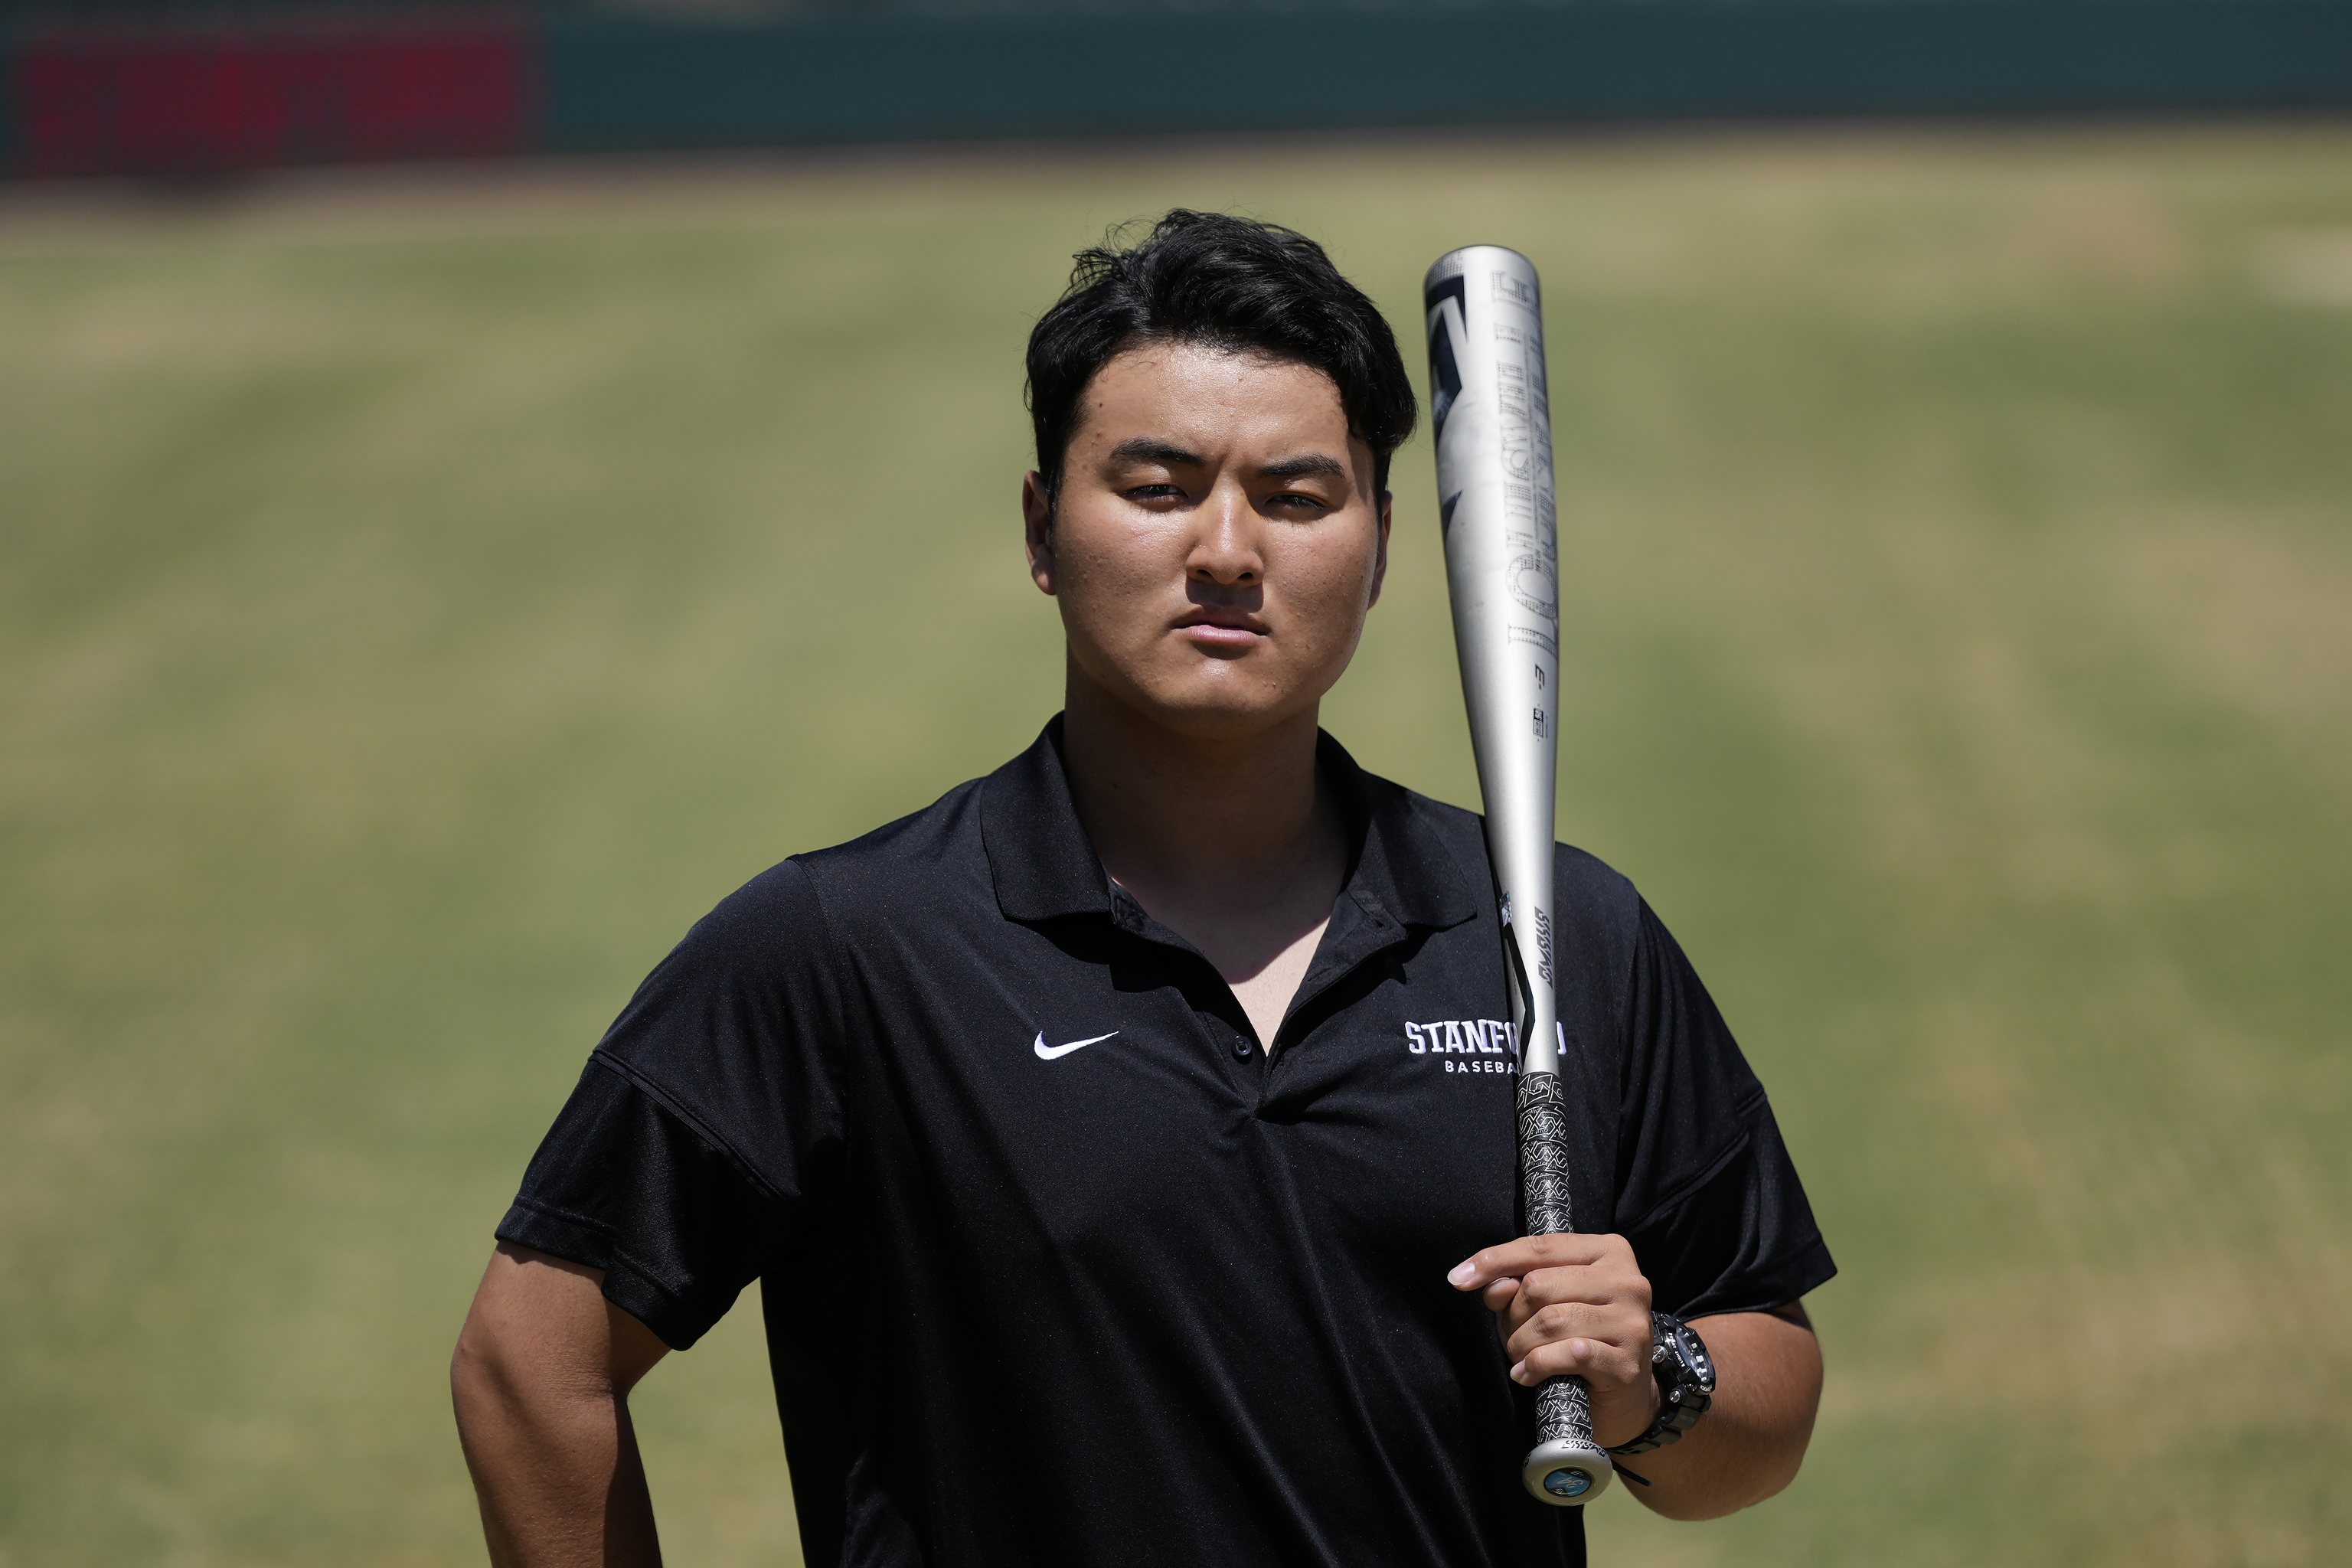 Rintaro Sasaki poses for photos at the Sunken Diamond baseball field at Stanford University